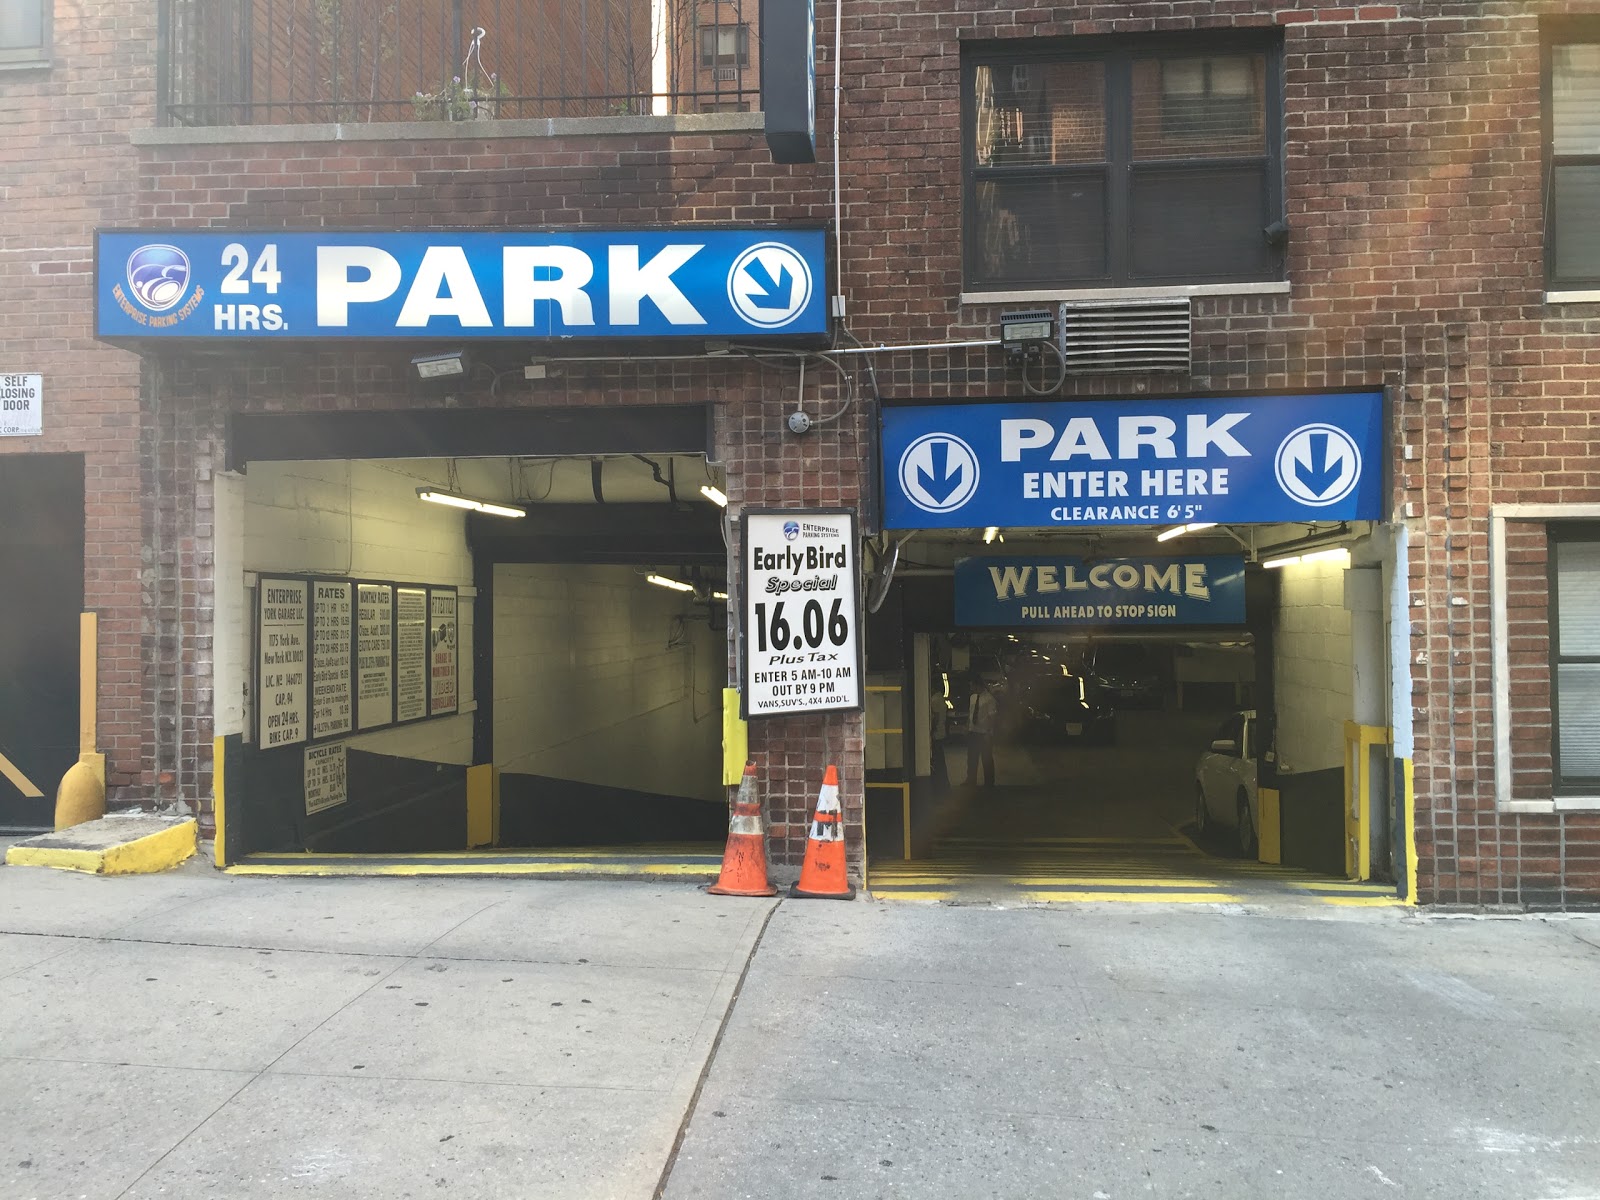 Photo of Enterprise York Garage LLC in New York City, New York, United States - 1 Picture of Point of interest, Establishment, Parking